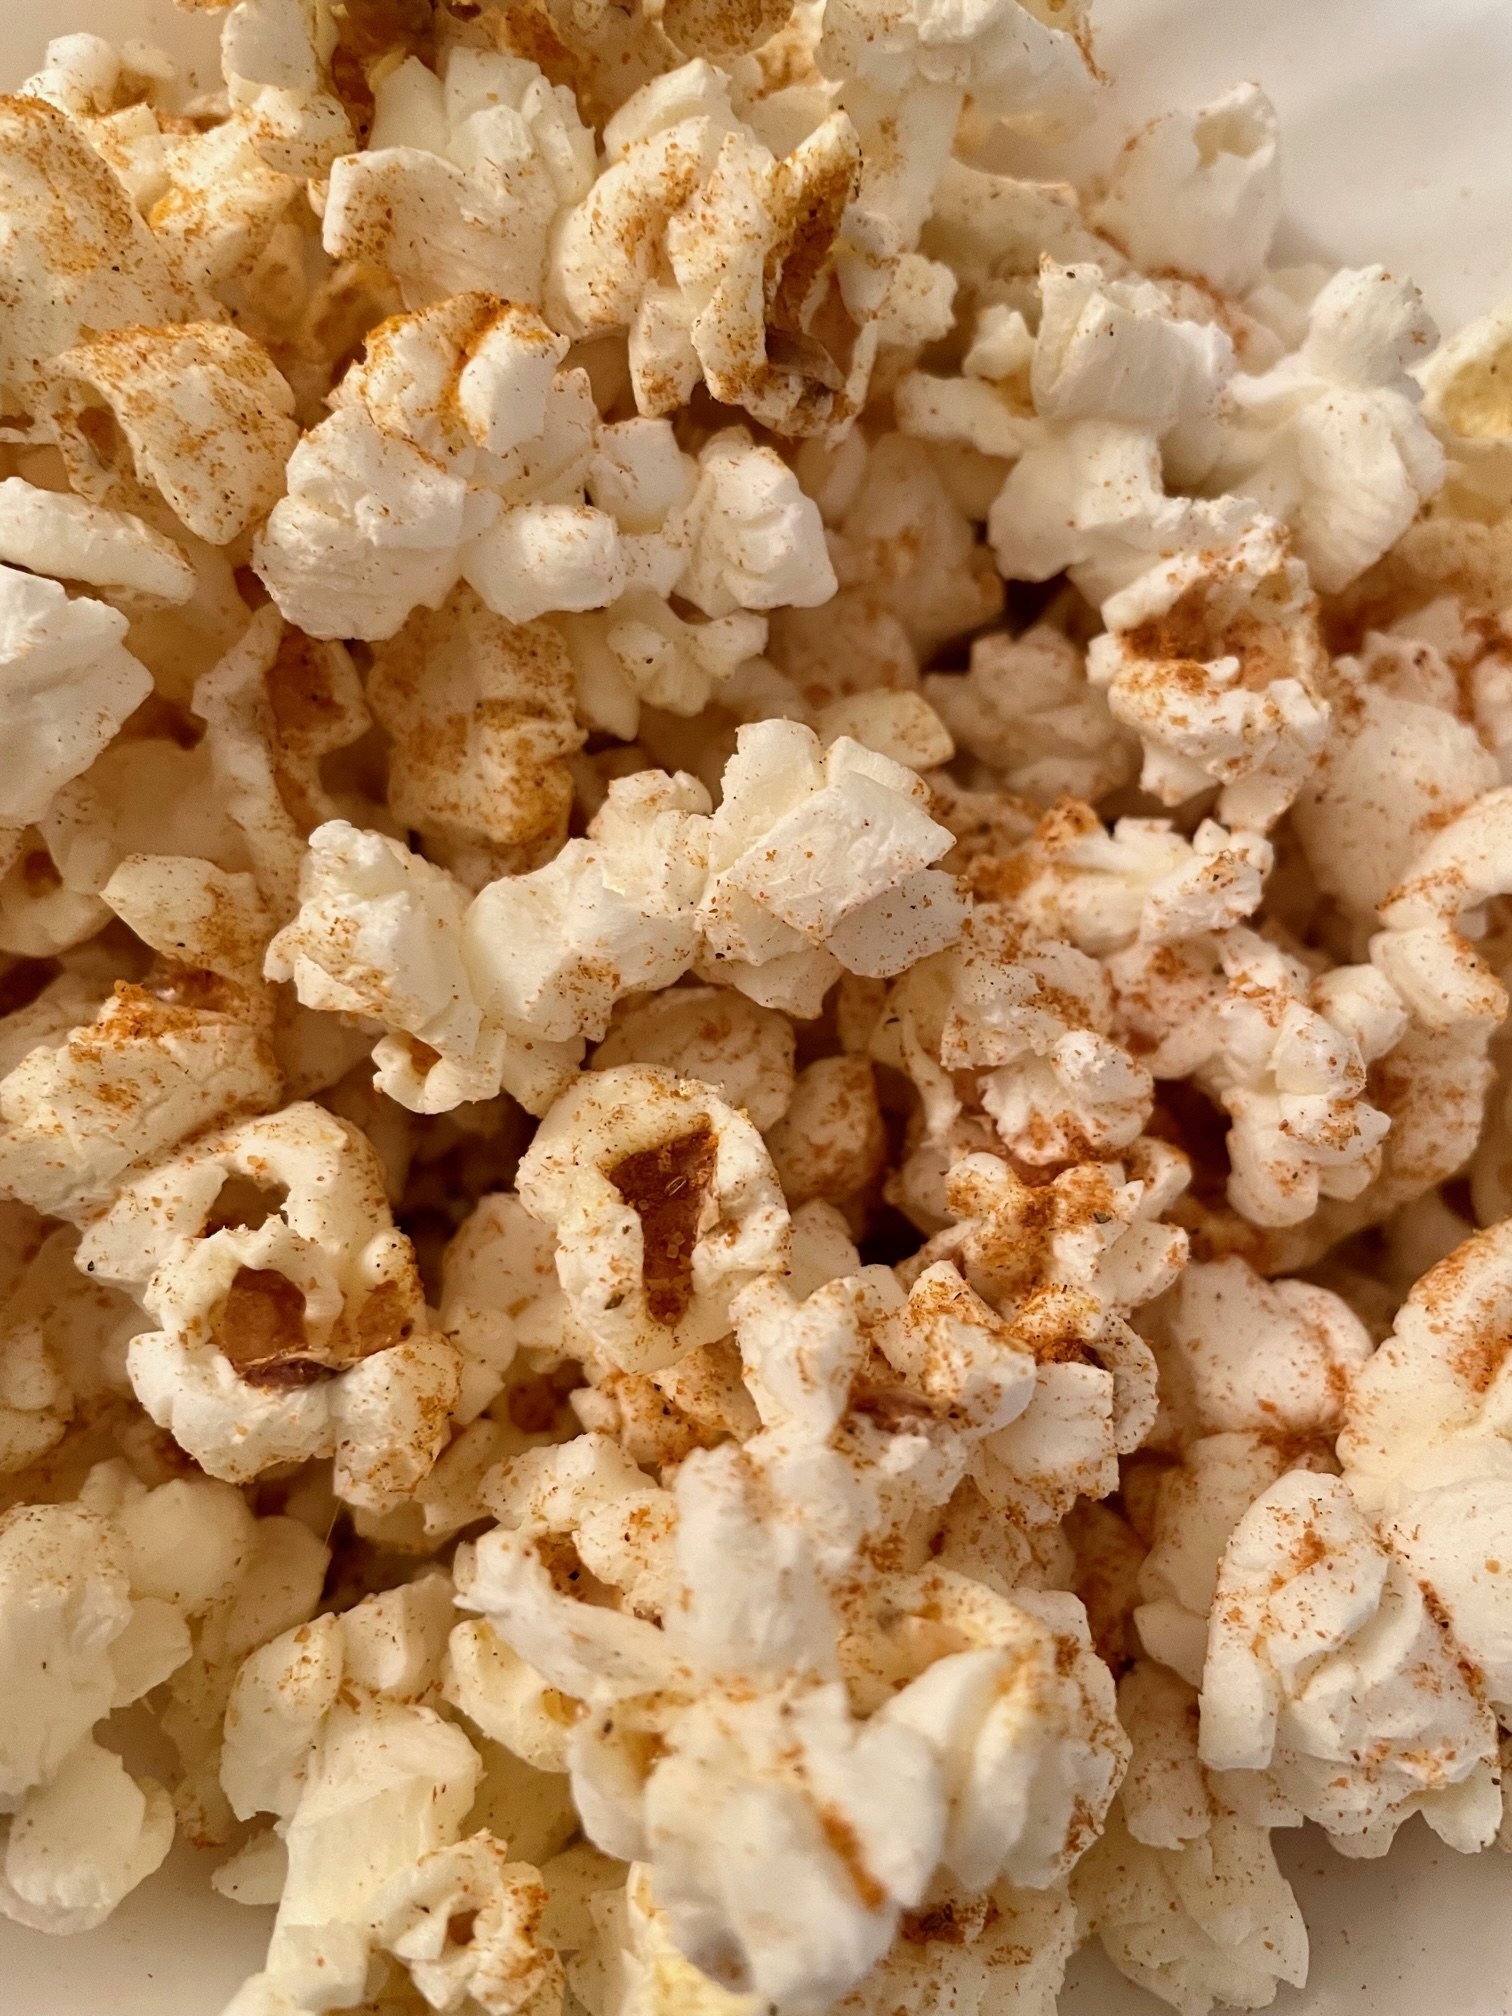 Popcorn with Old Bay Seasoning